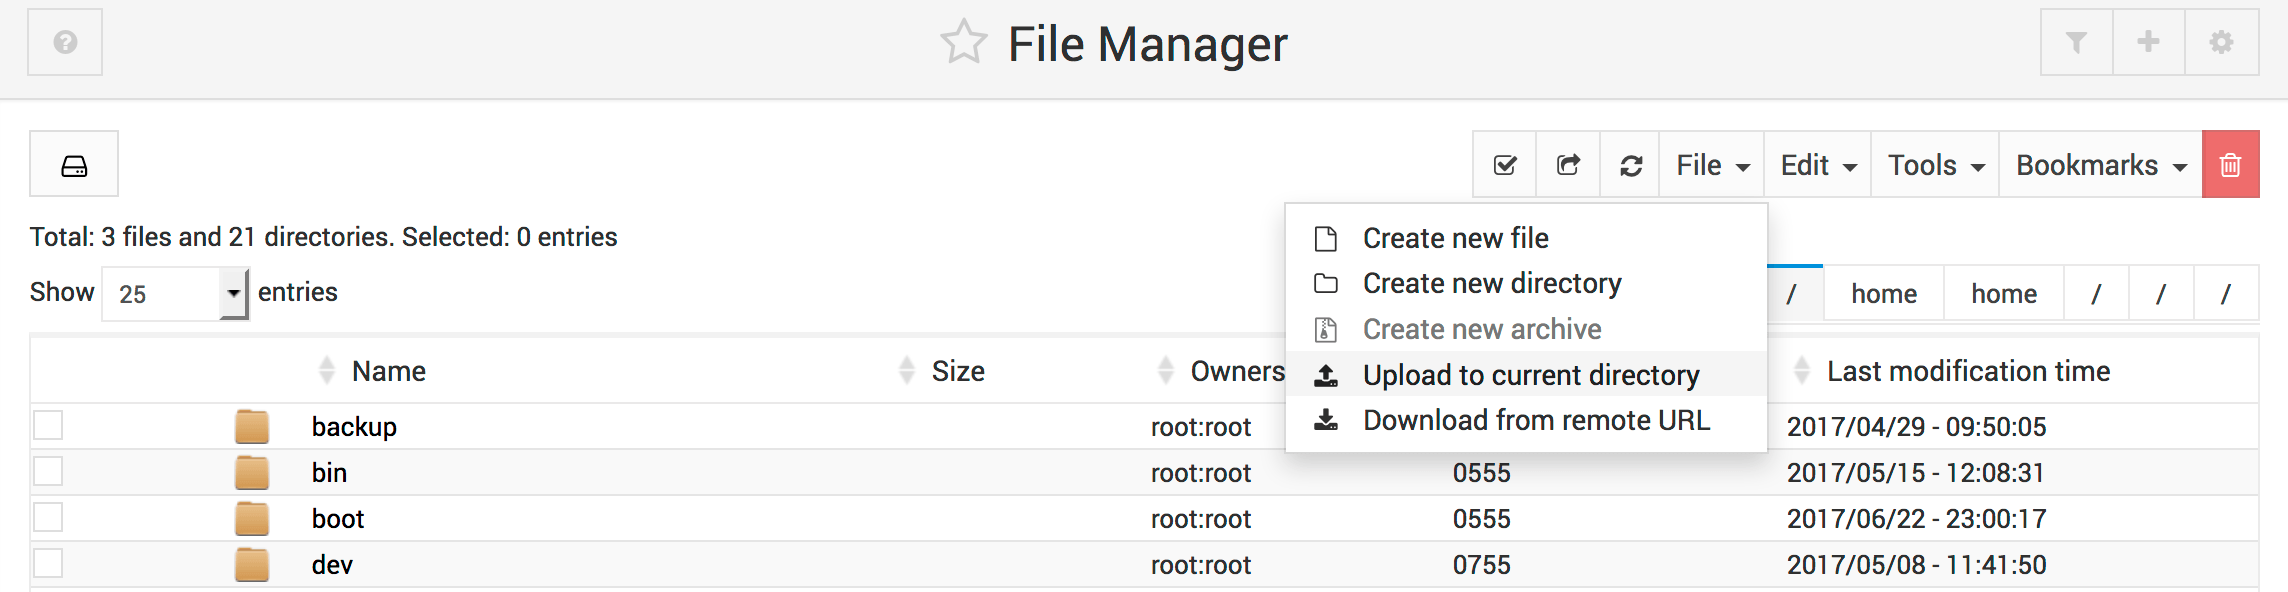 webmin file manager 2